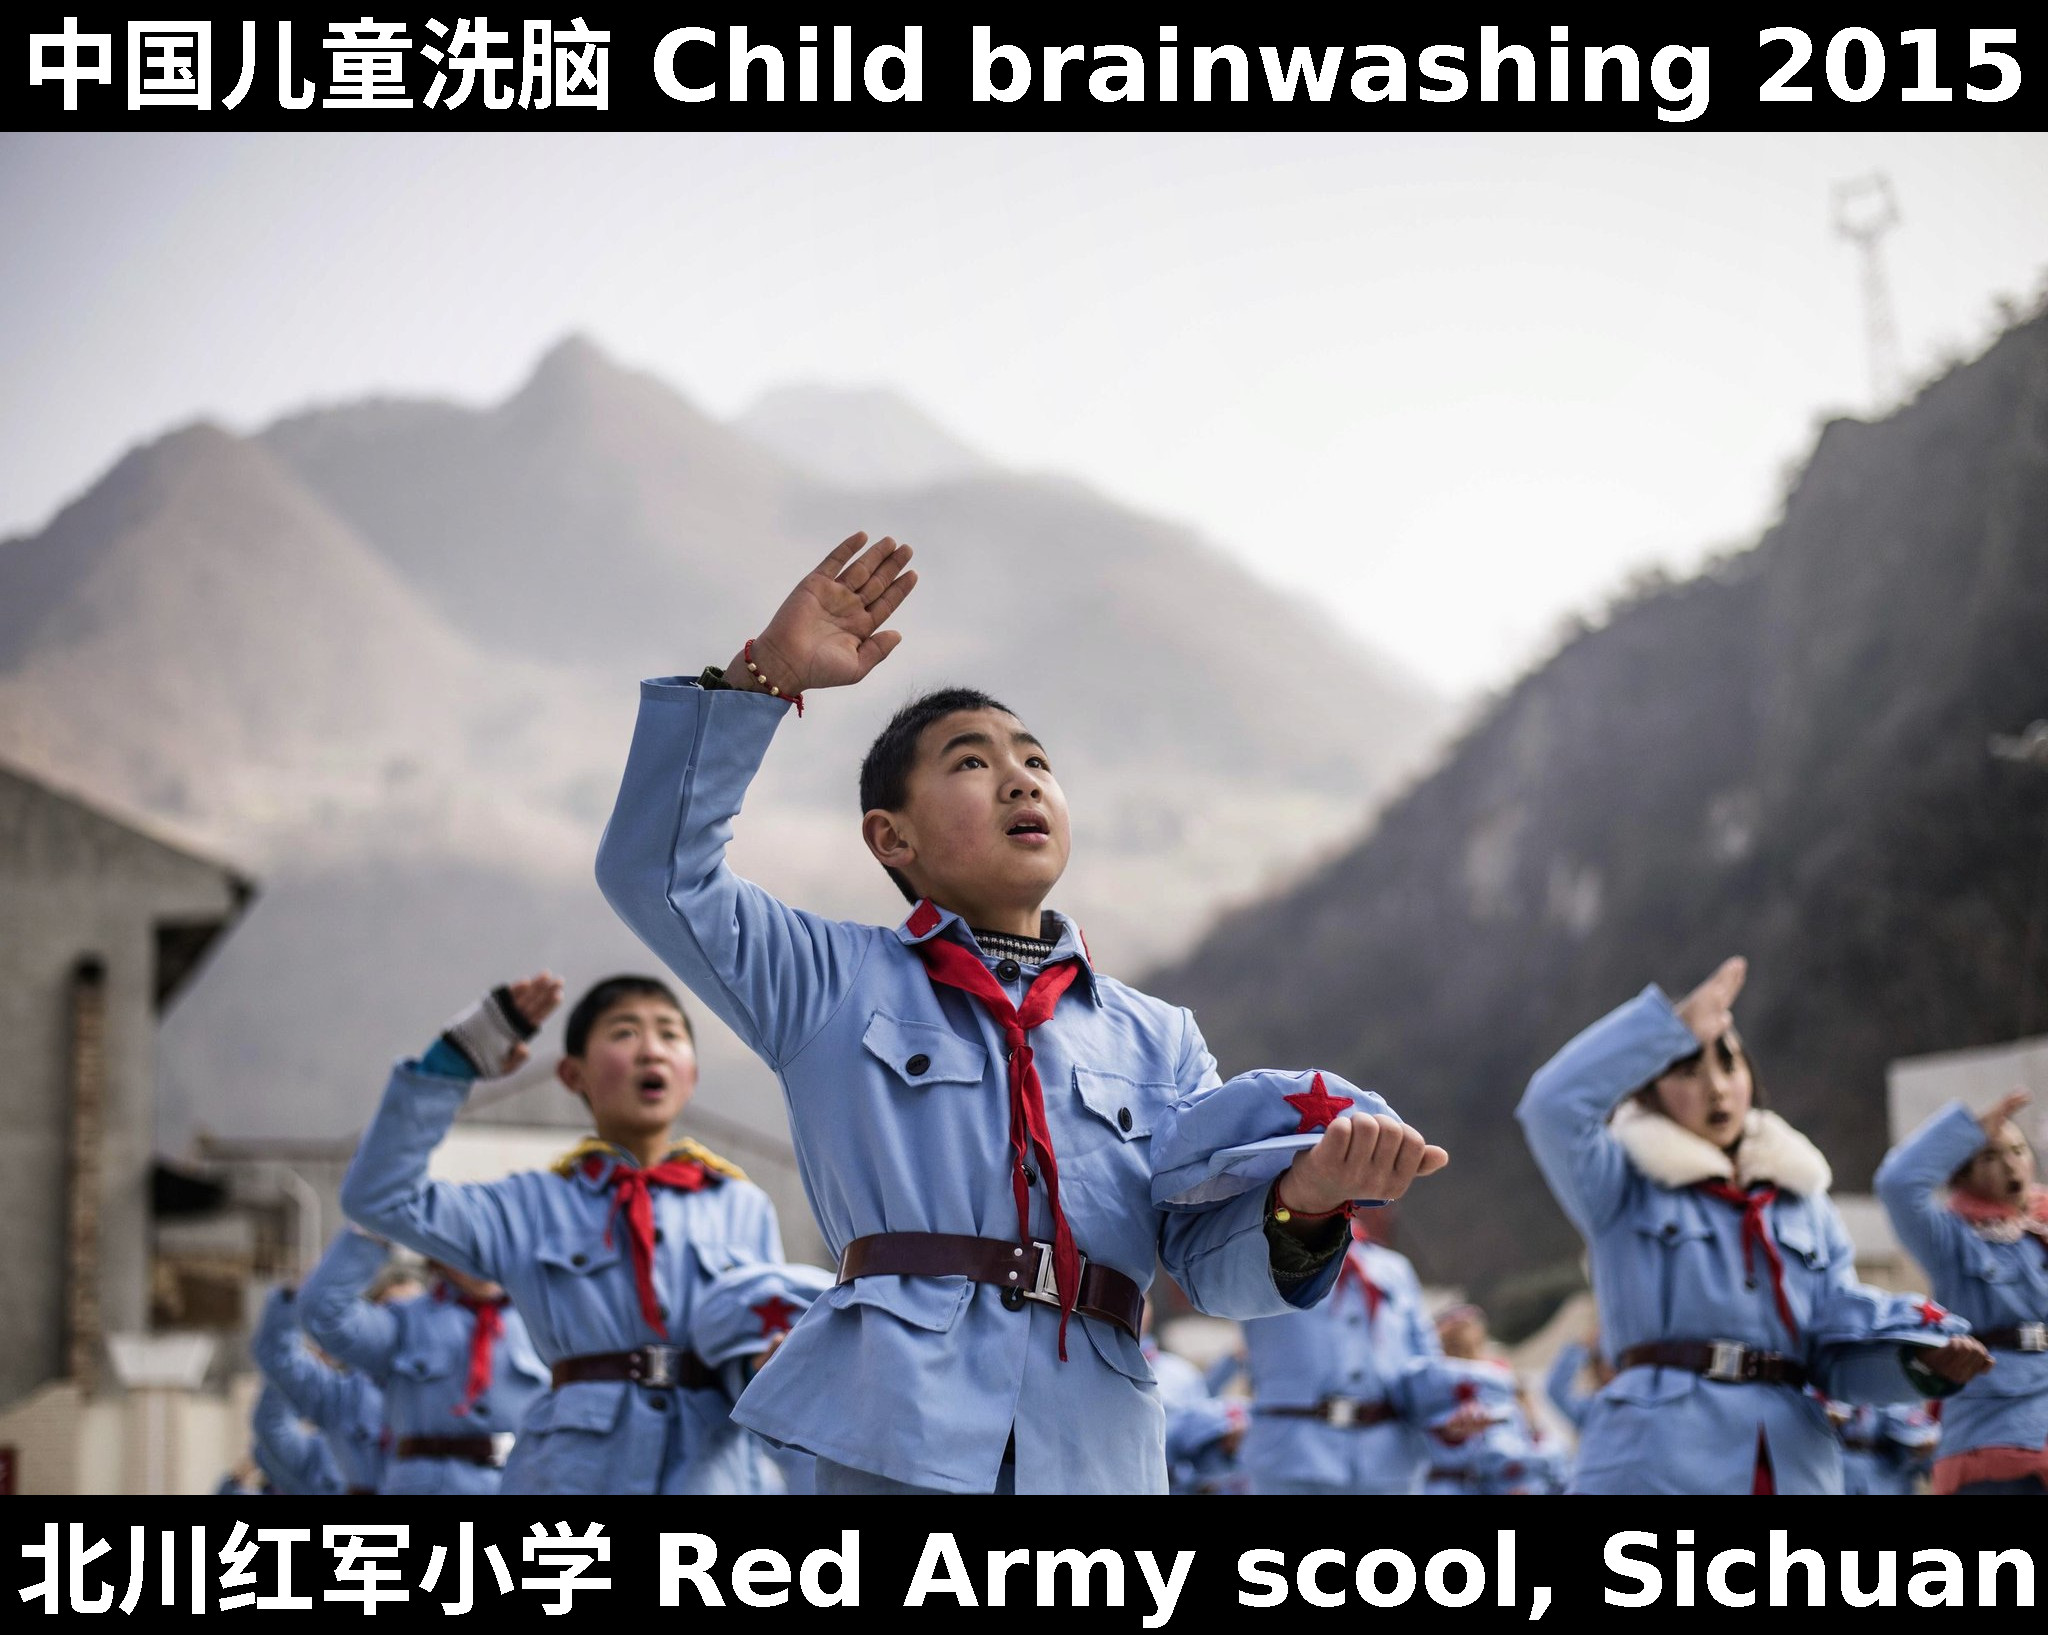 Red army school